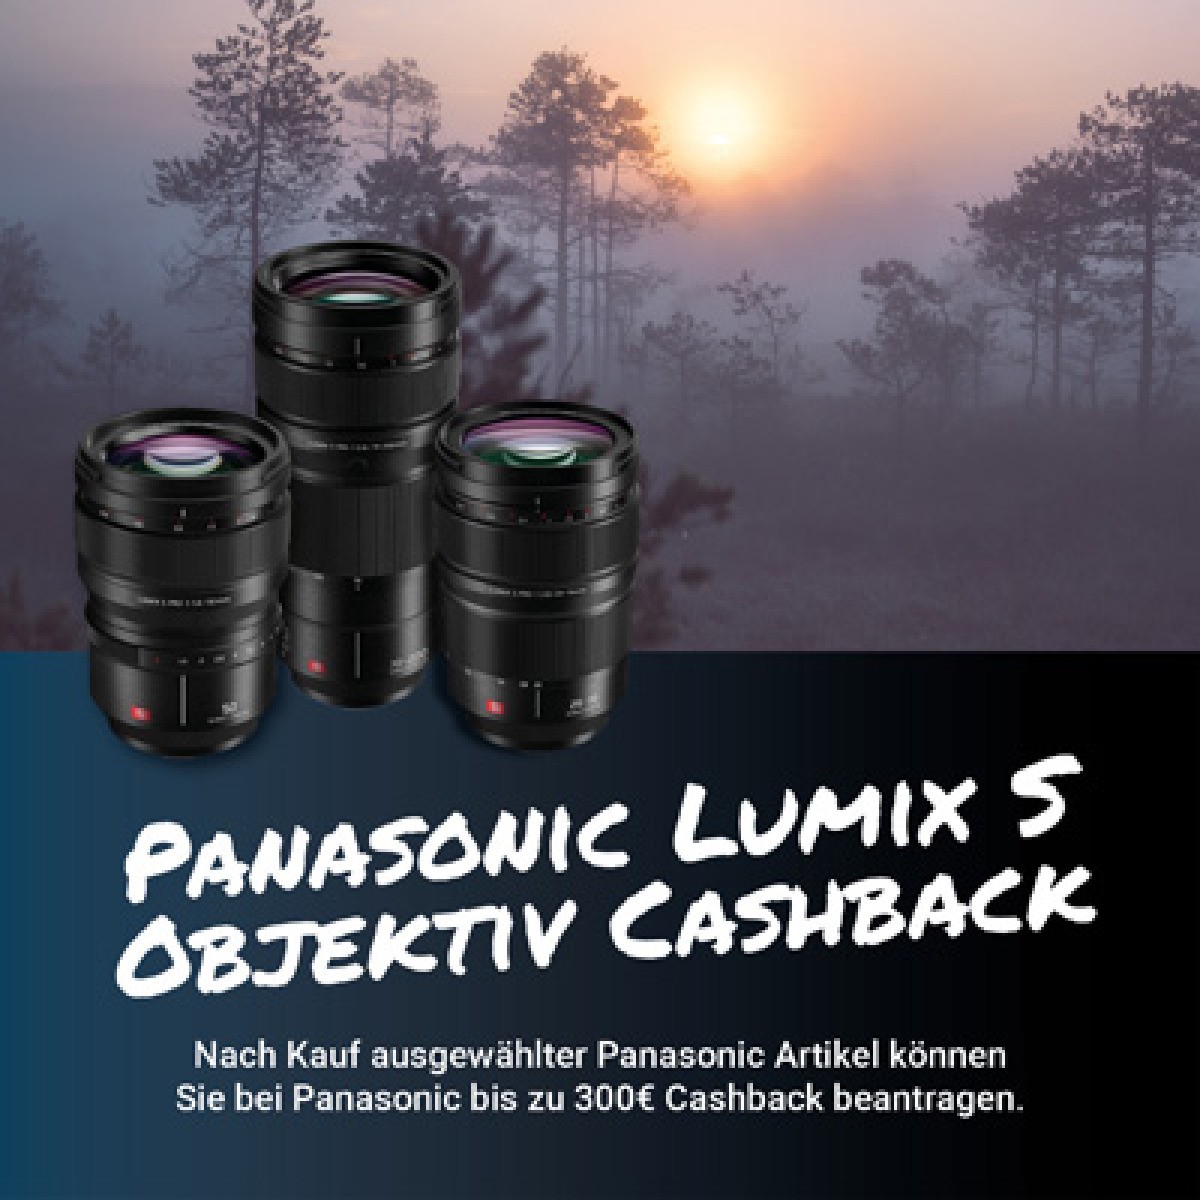 Panasonic Lumix S Objektiv Cashback